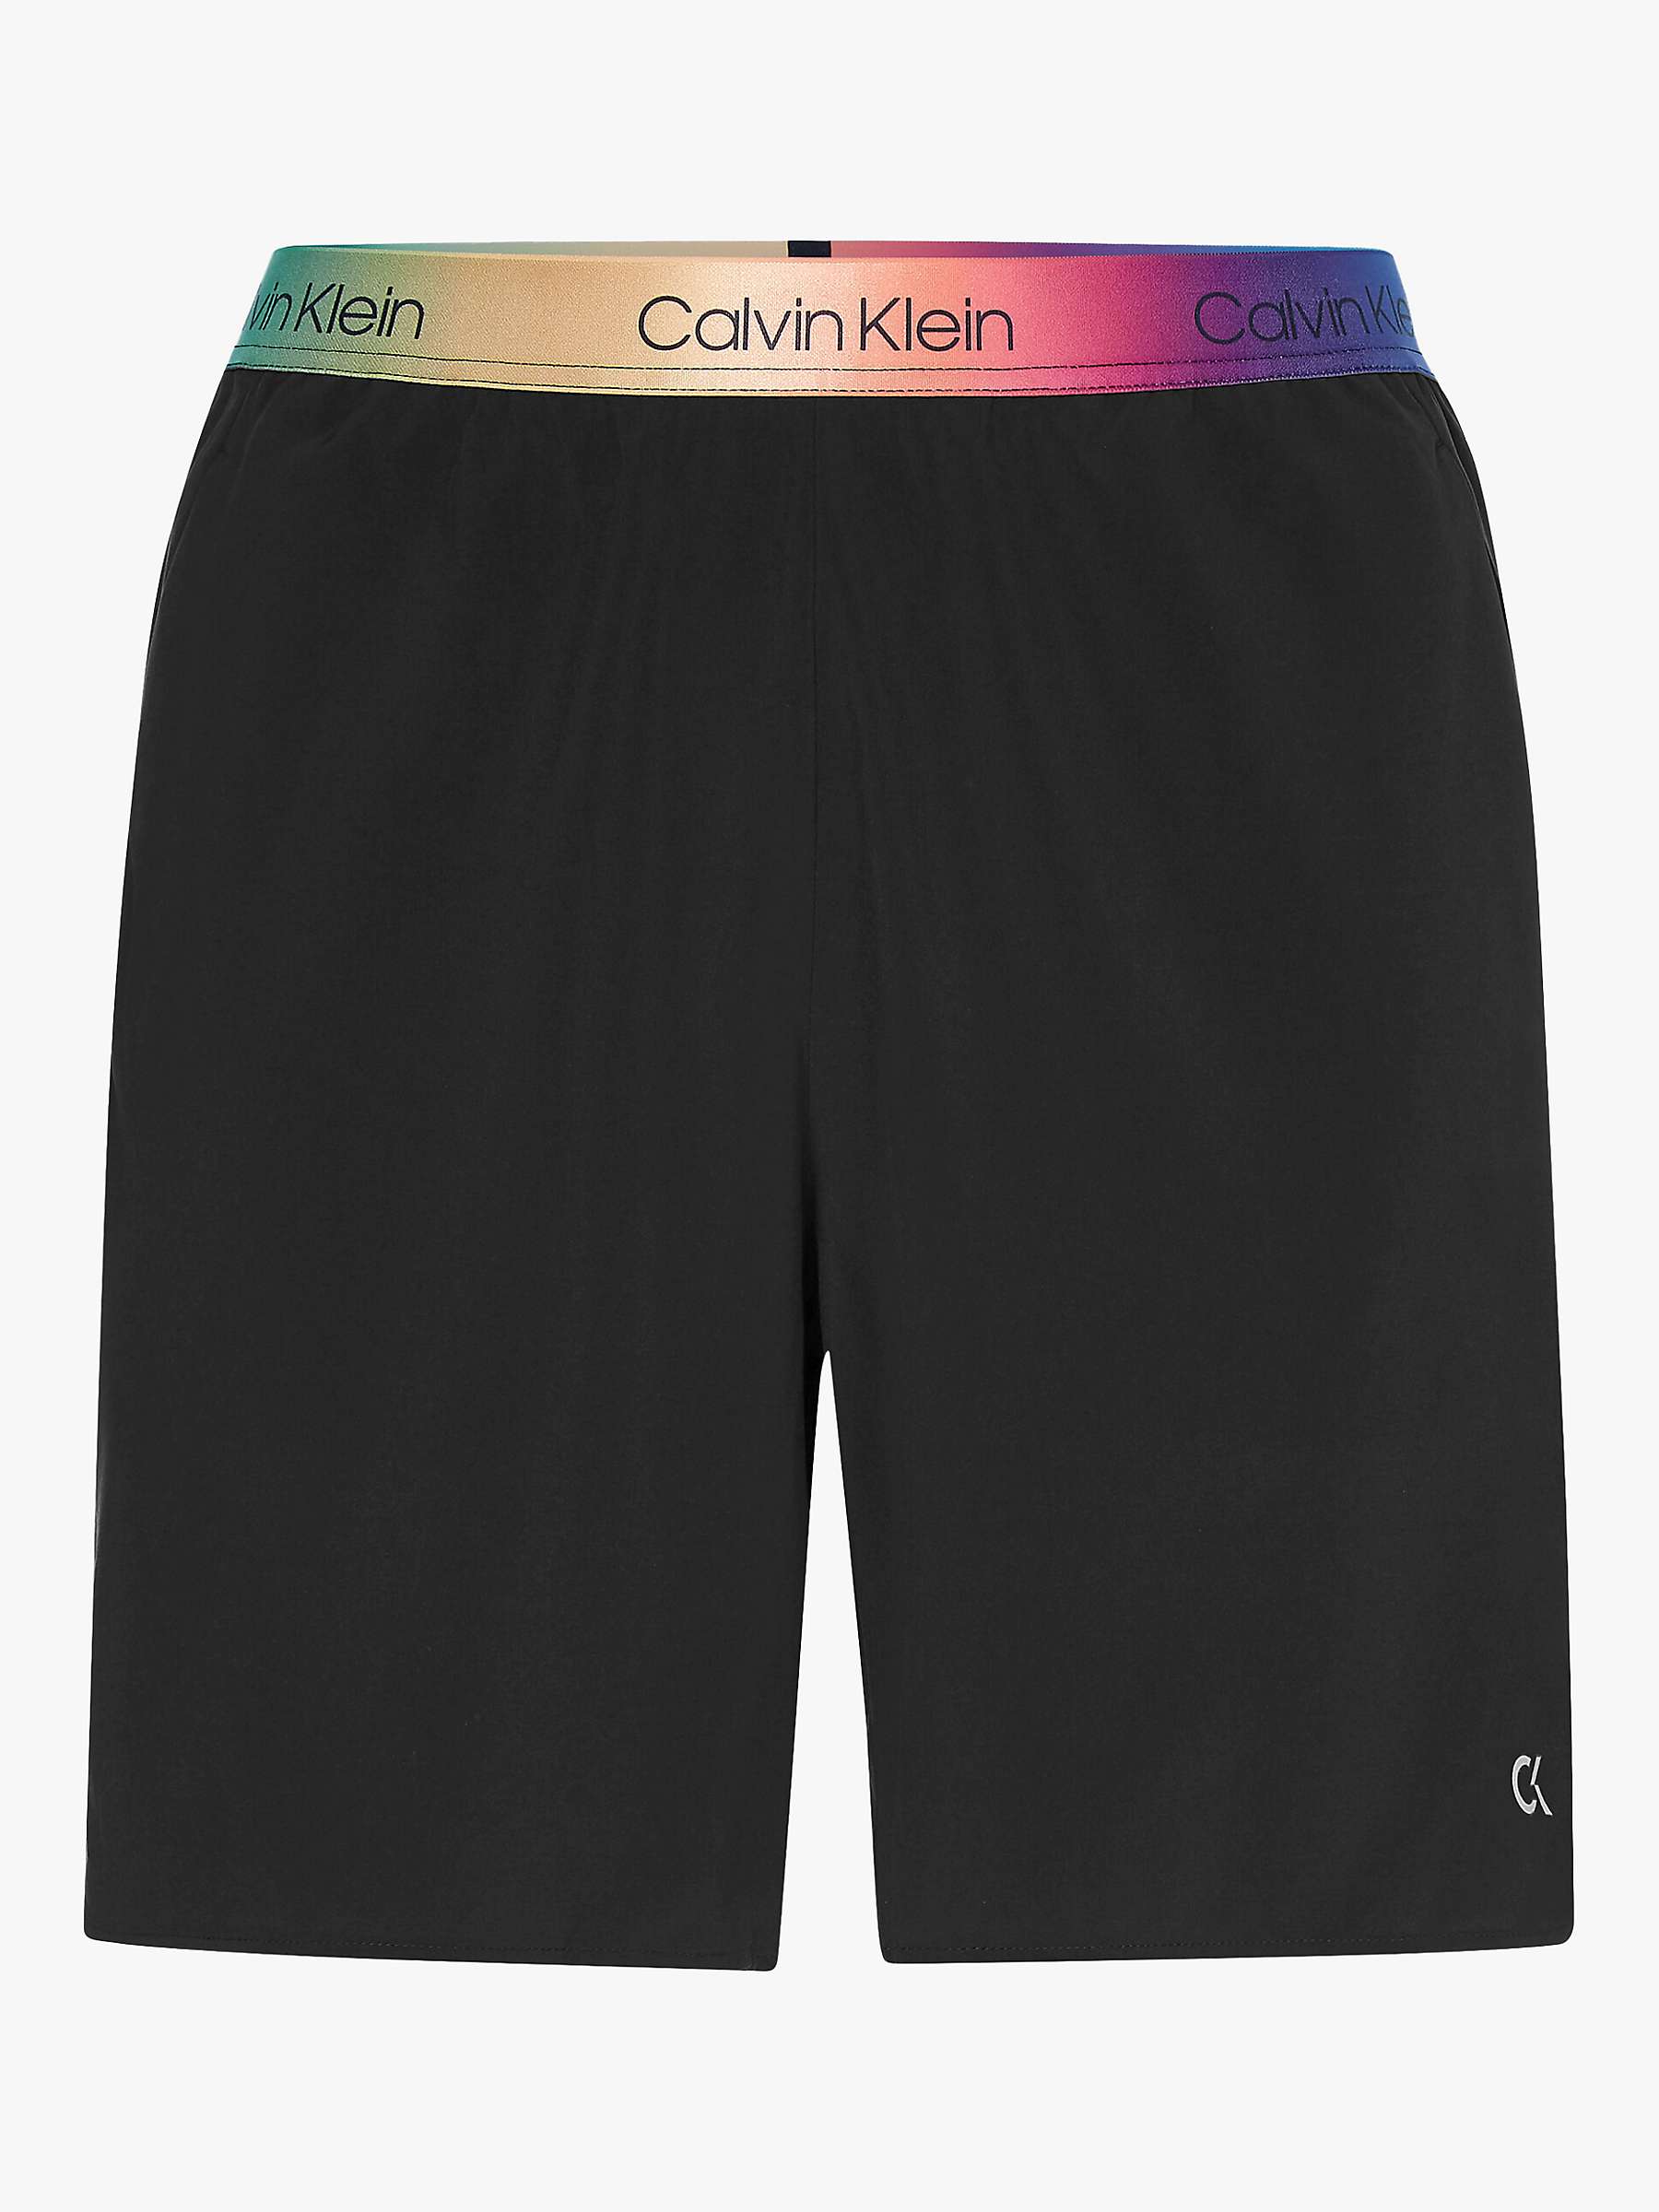 Calvin Klein Performance Pride Collection Woven Workout Shorts, CK ...